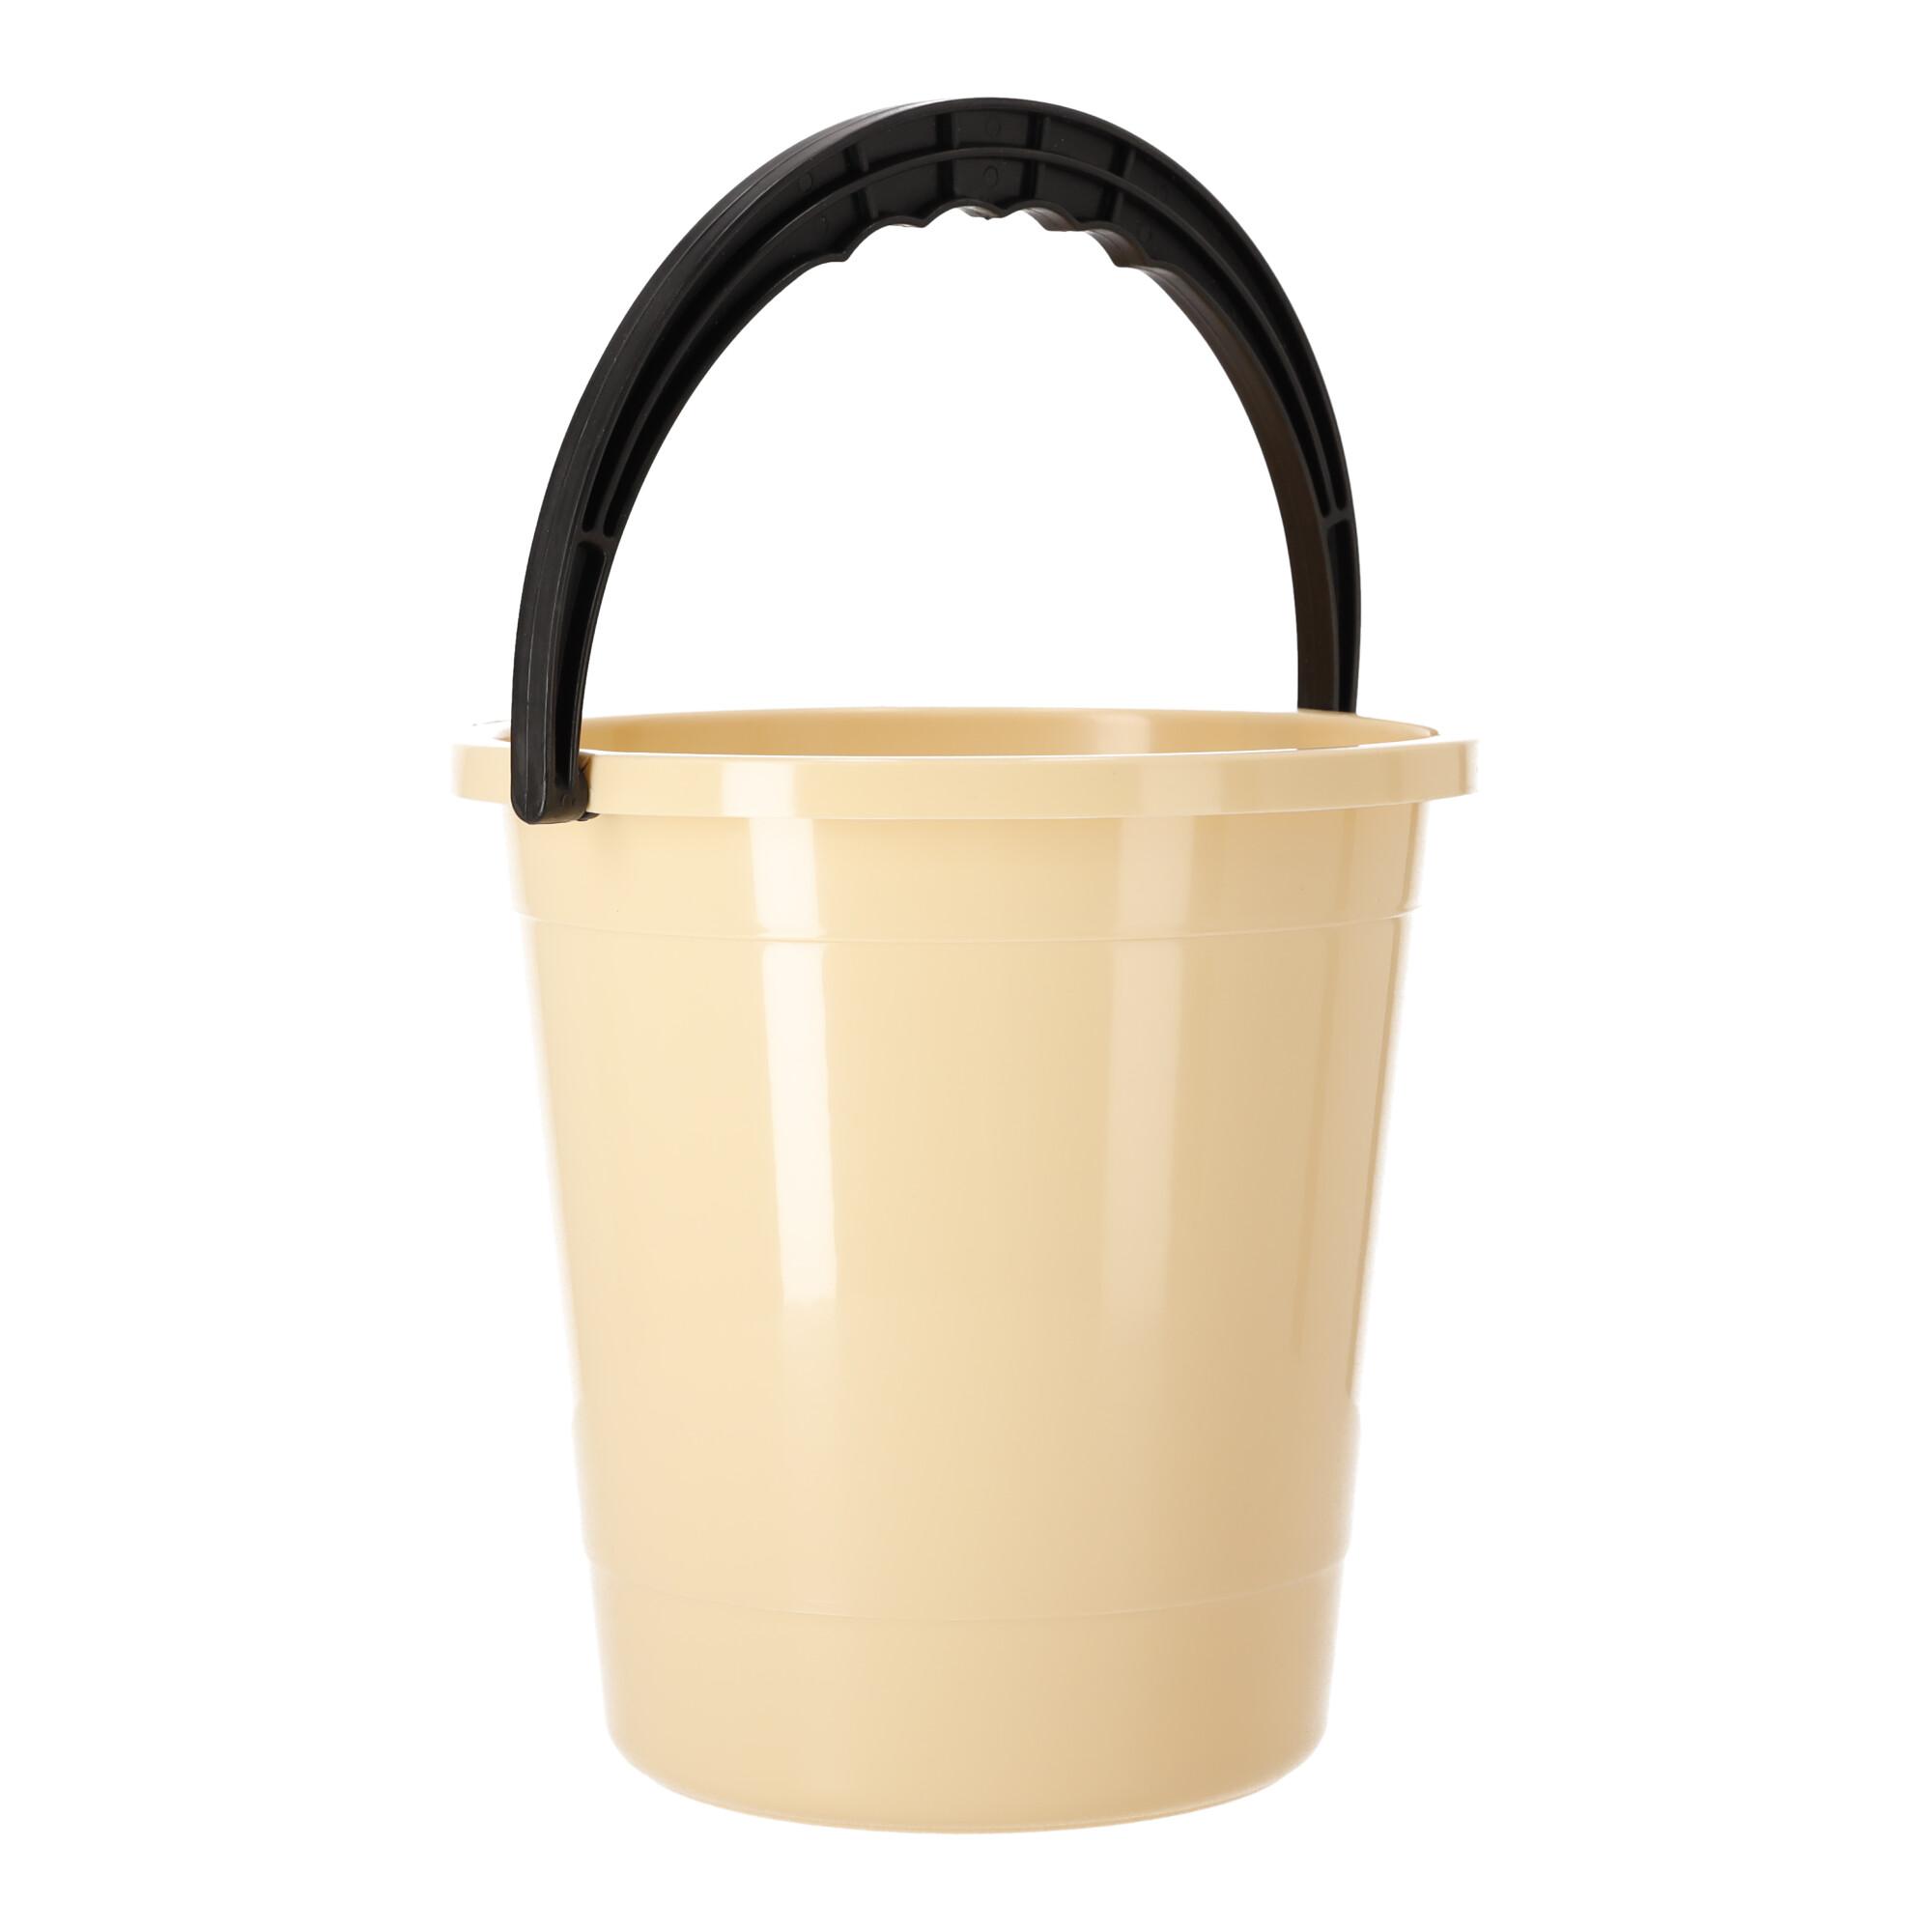 Bucket 5L, POLISH PRODUCT - cream color